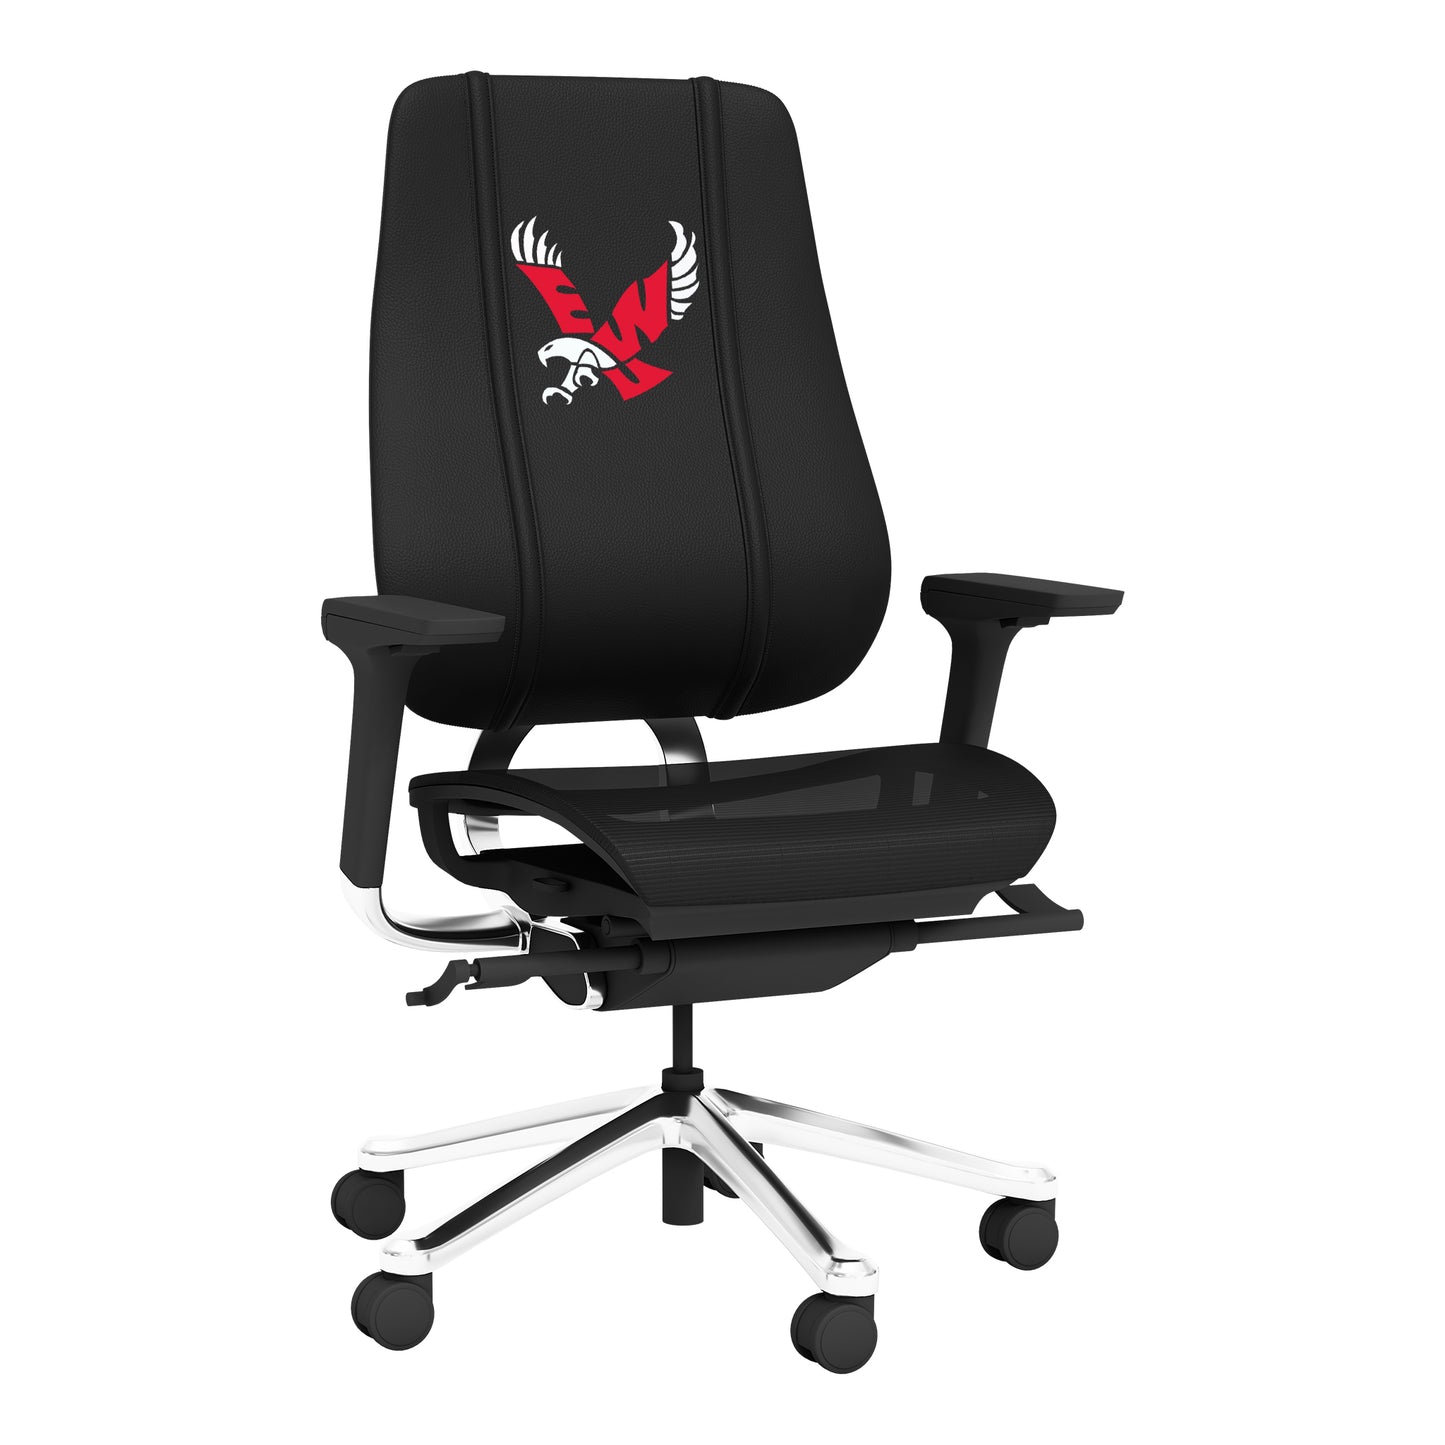 PhantomX Gaming Chair with Eastern Washington Eagles Solo